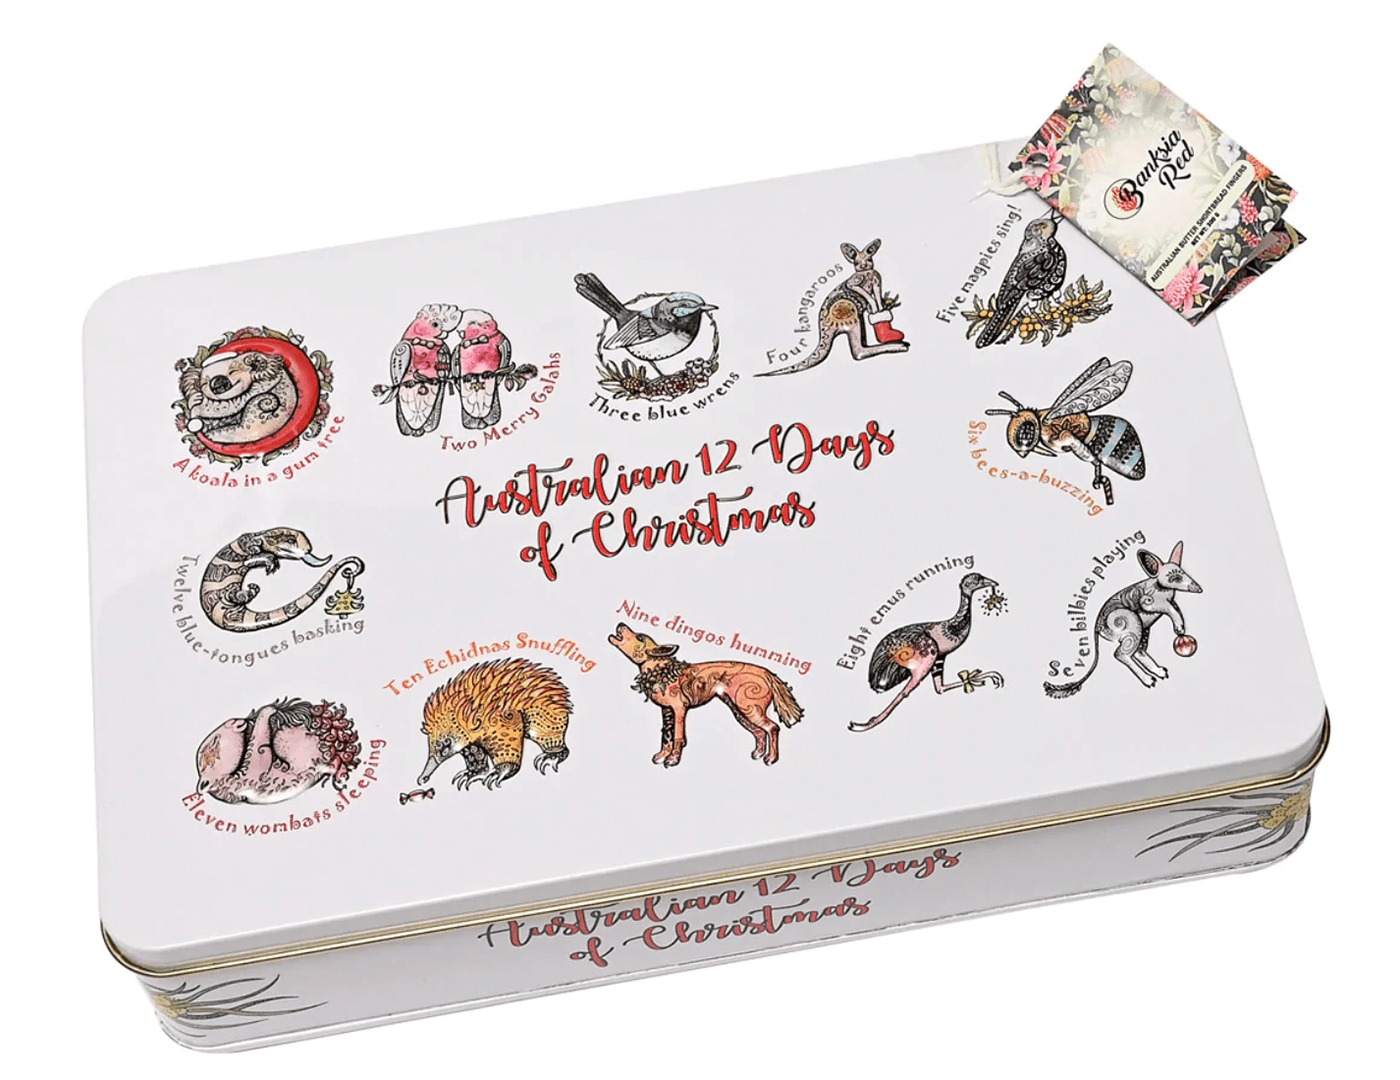 An Australian 12 days of Christmas tin featuring festive Australian animals.